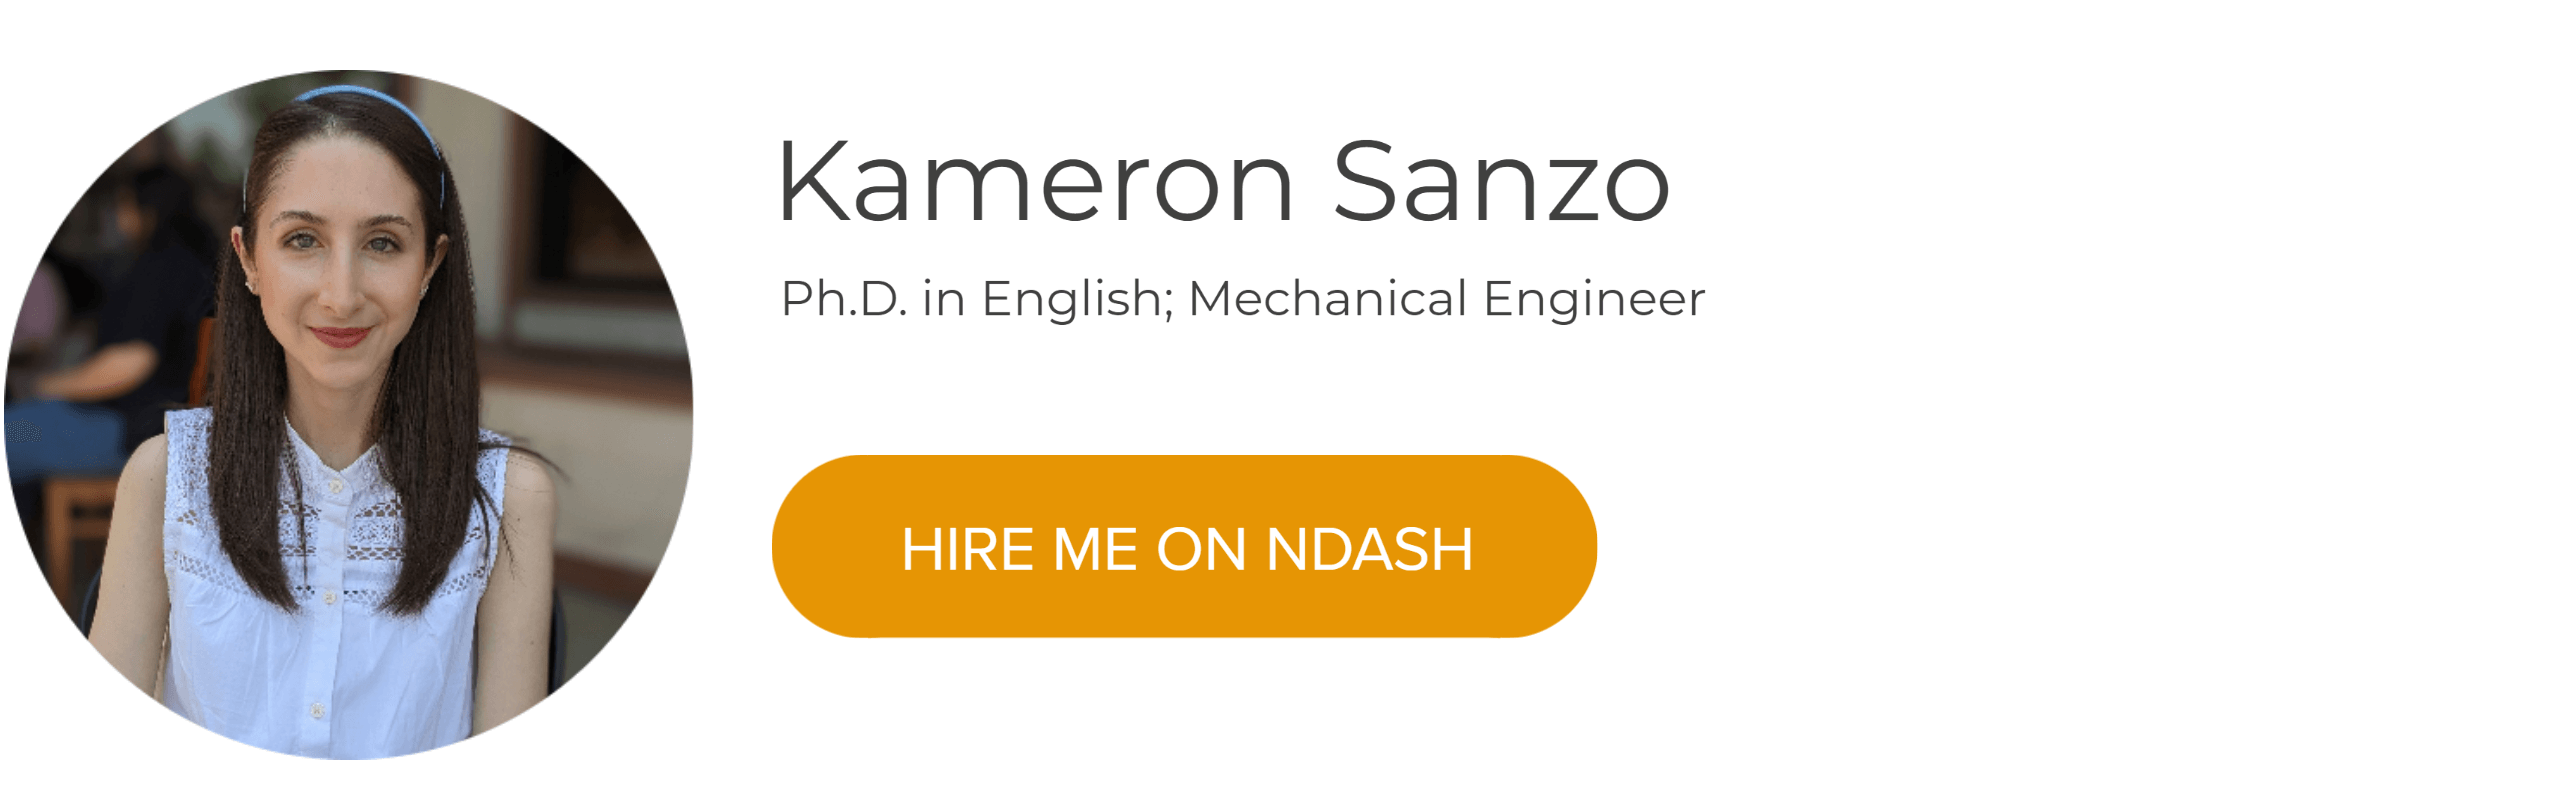 Kameron Sanzo: Ph.D. in English and Mechanical Engineer